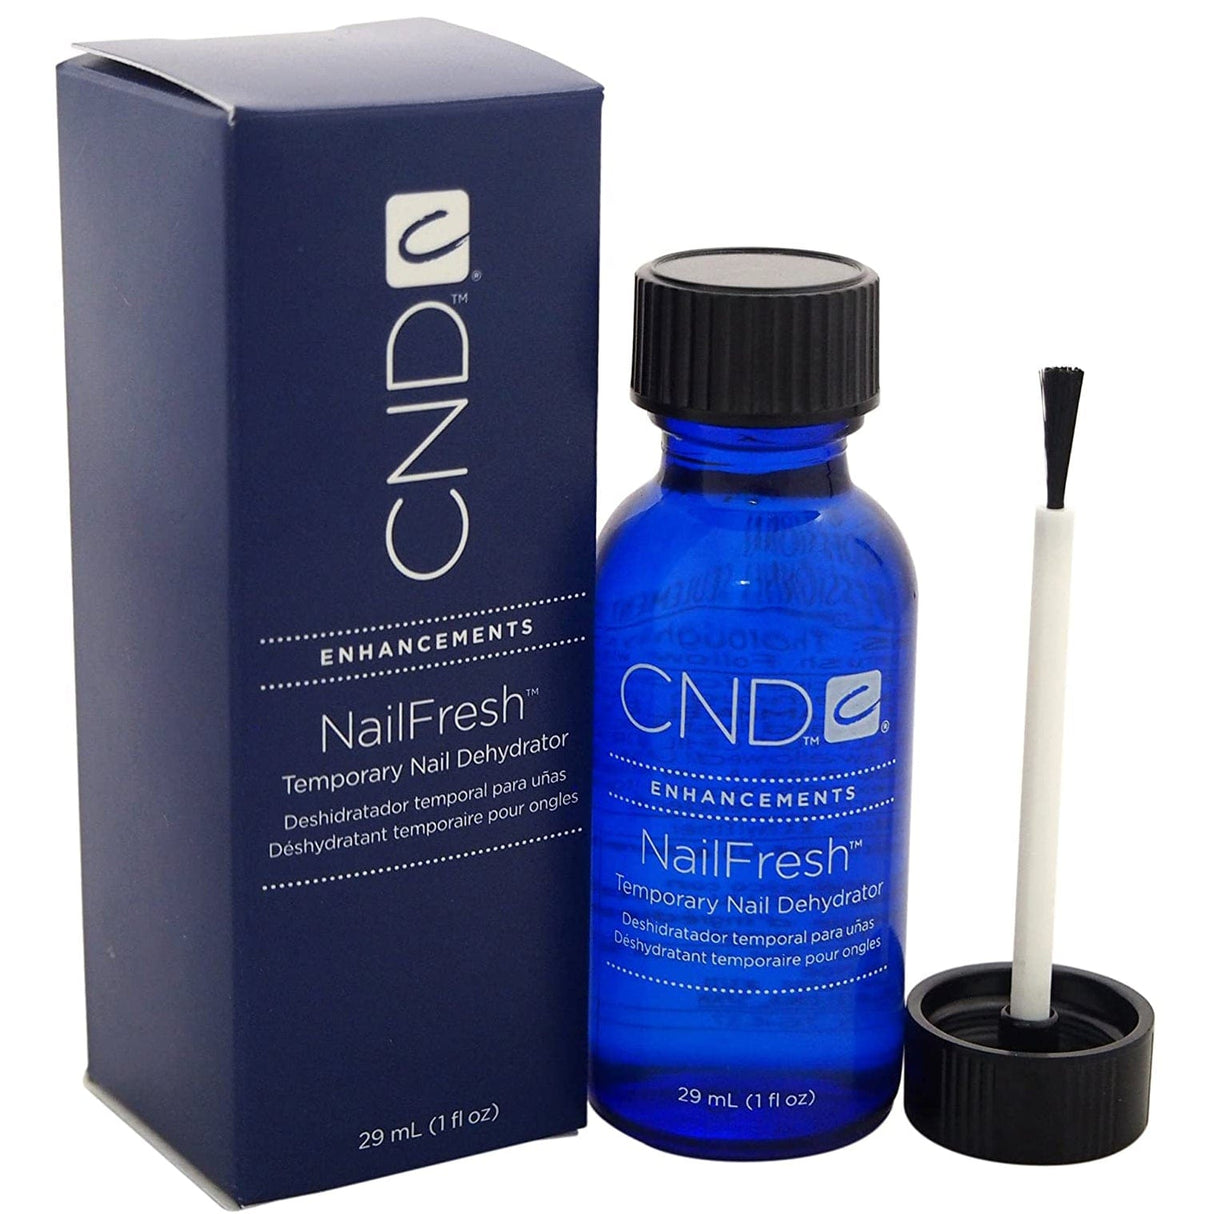 CND NailFresh Temporary Nail Dehydrator (1oz)